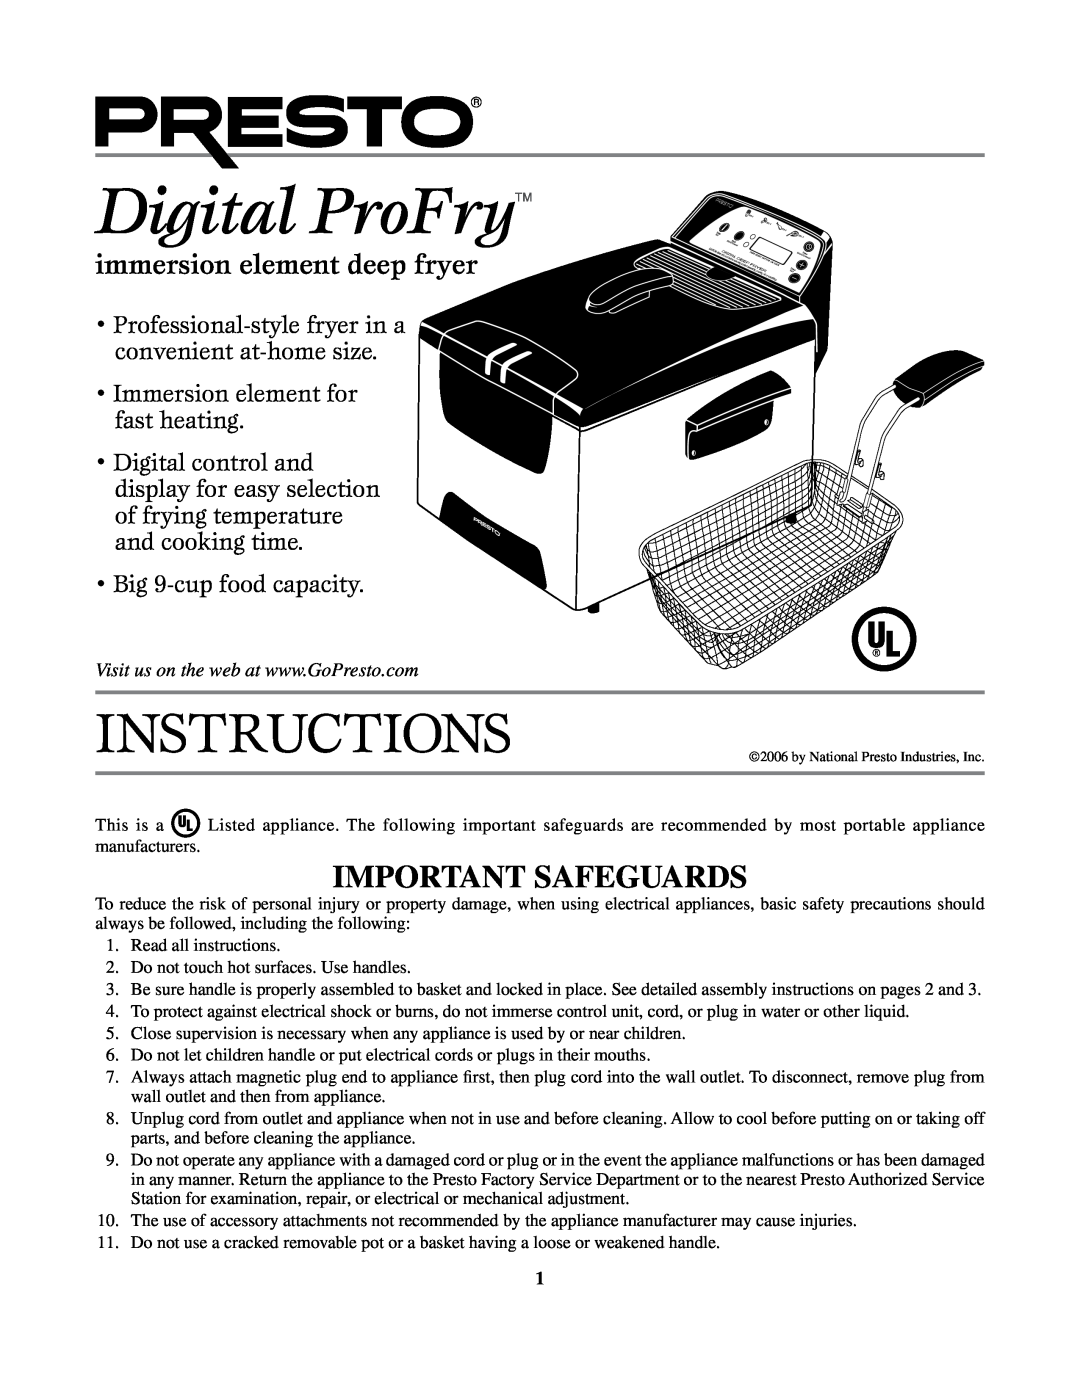 Presto manual Important Safeguards, Digital ProFry, Instructions, immersion element deep fryer 